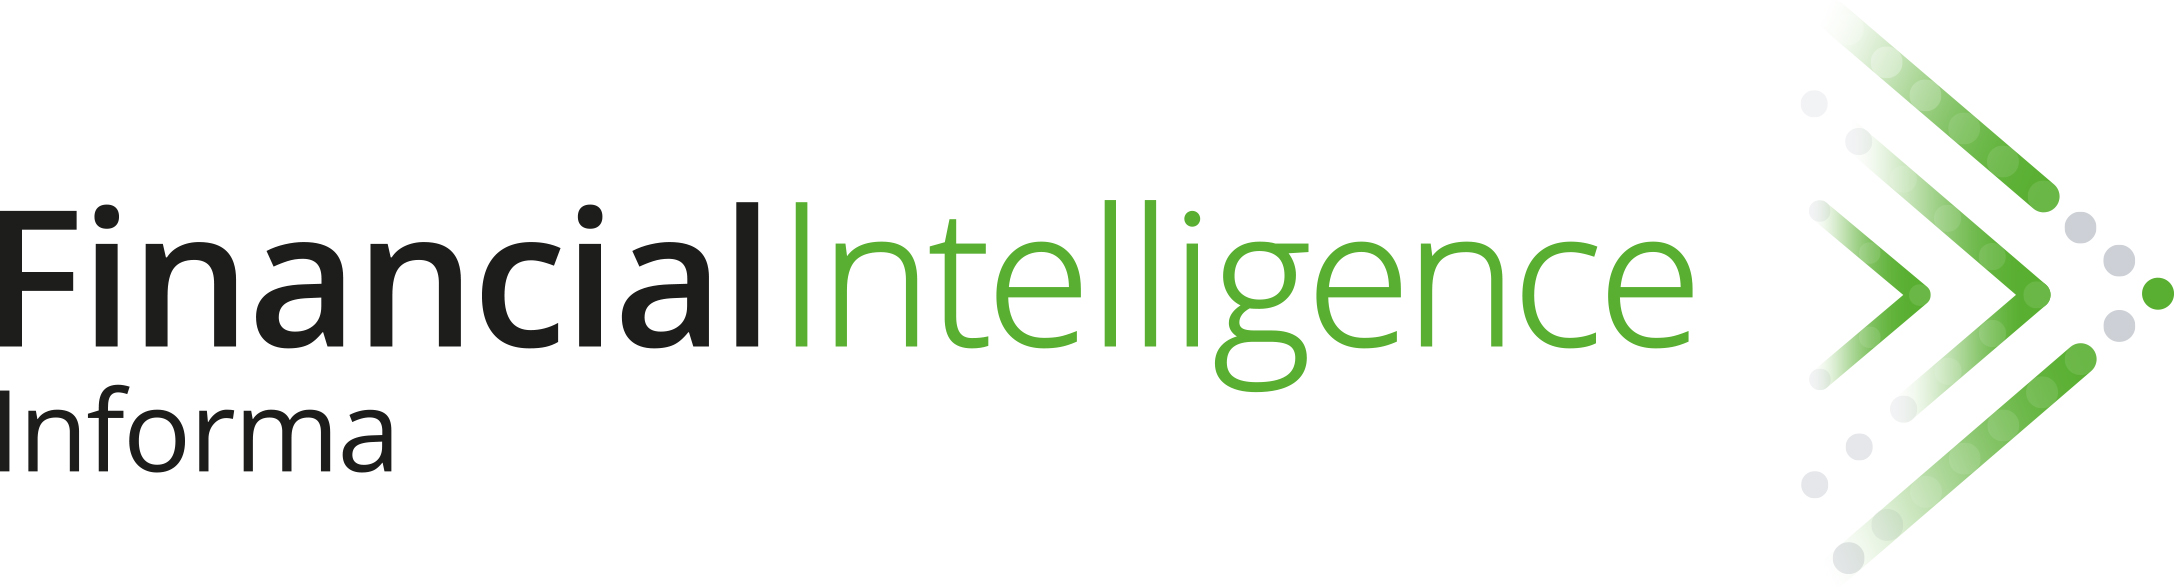 Financial Intelligence Logos_FinancialIntelligence_RGB.jpg